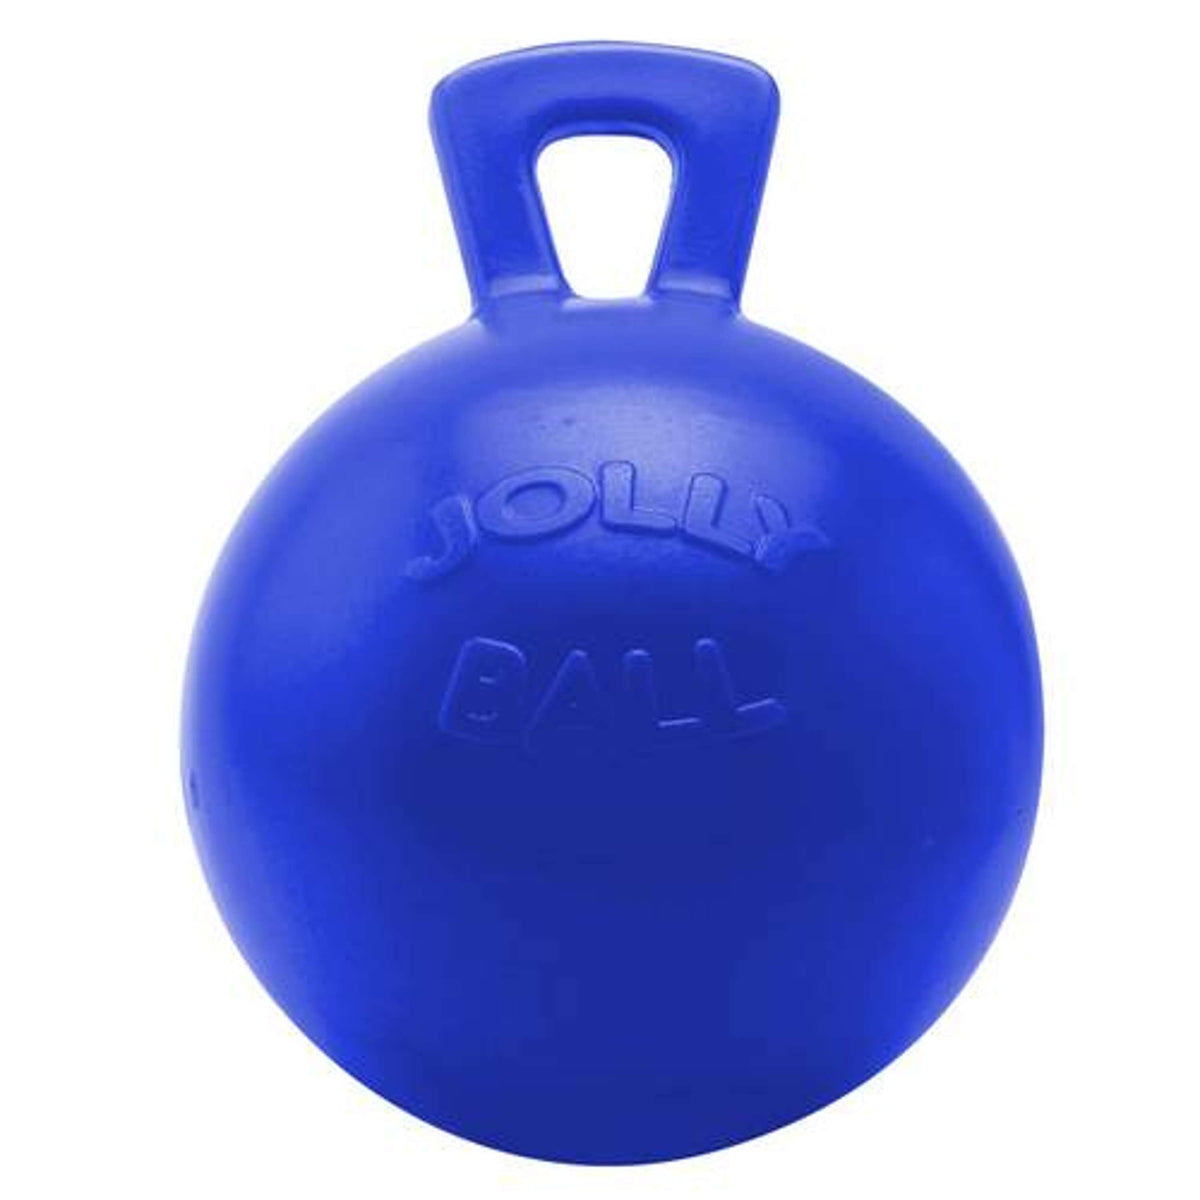 Jolly Ball Spielball Dunkelblau